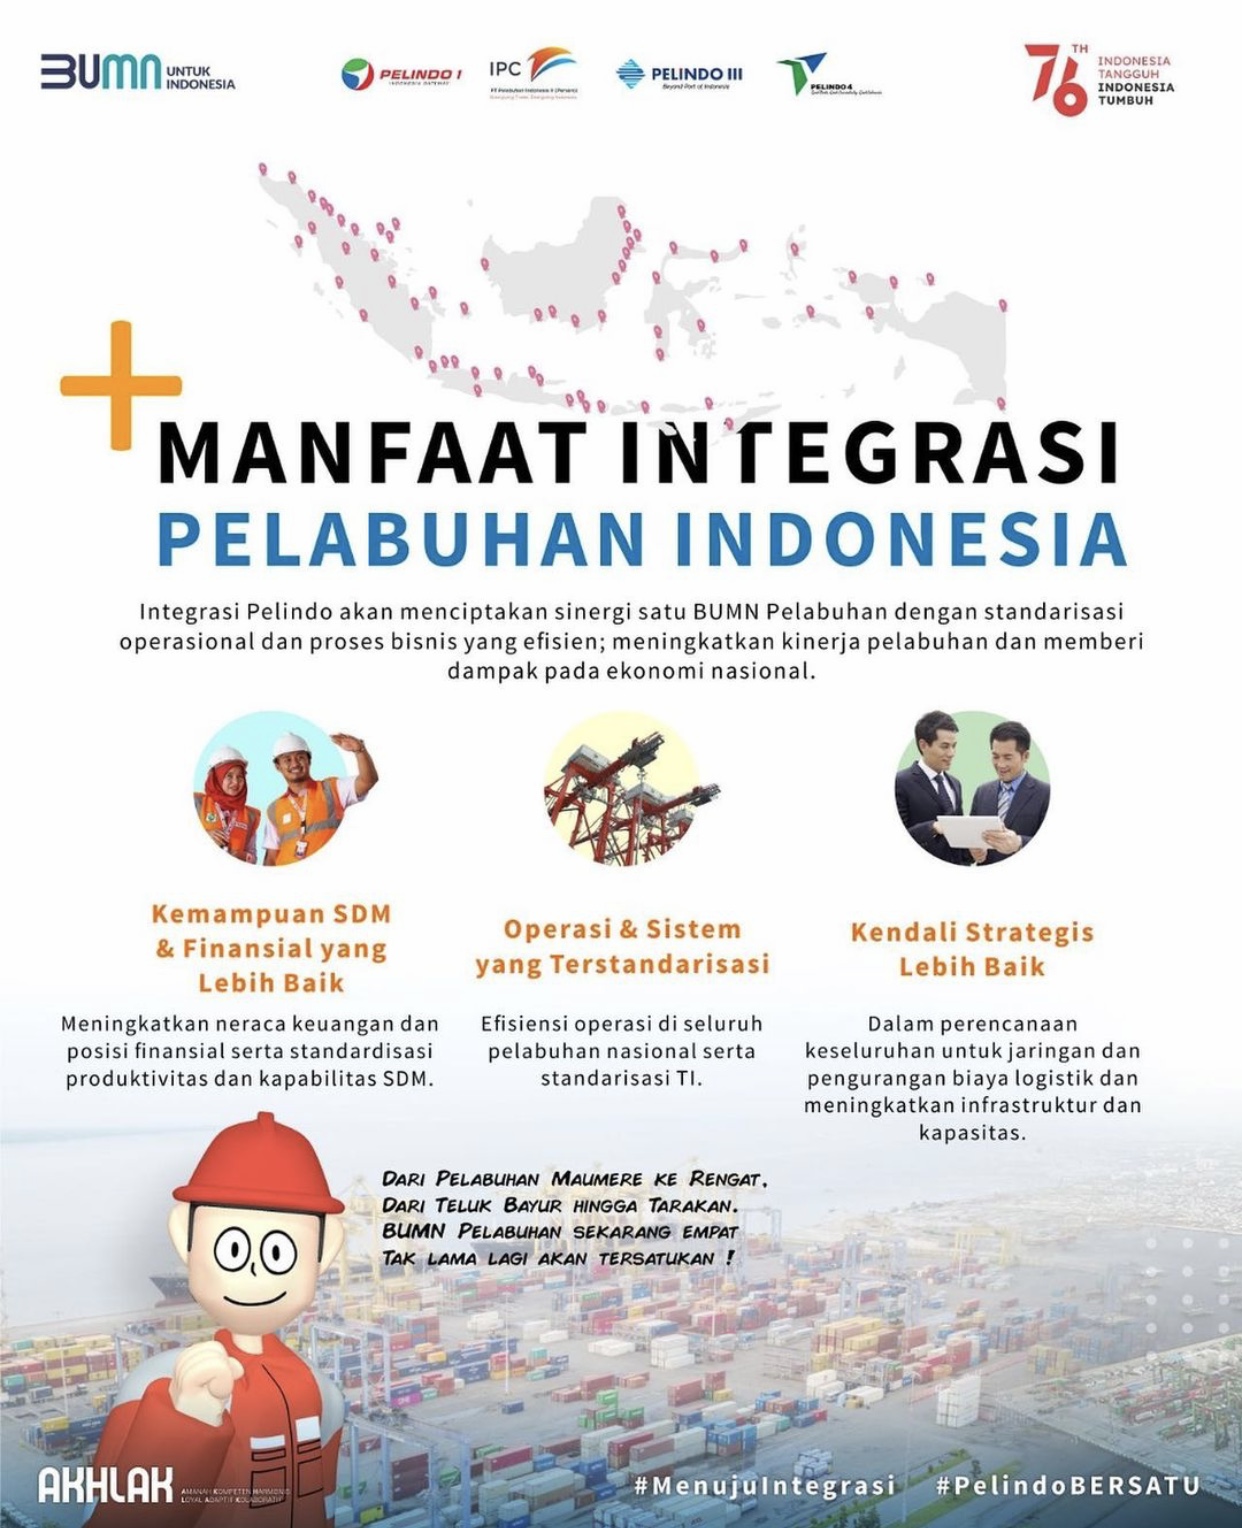 Manfaat Integrasi Pelabuhan Indonesia